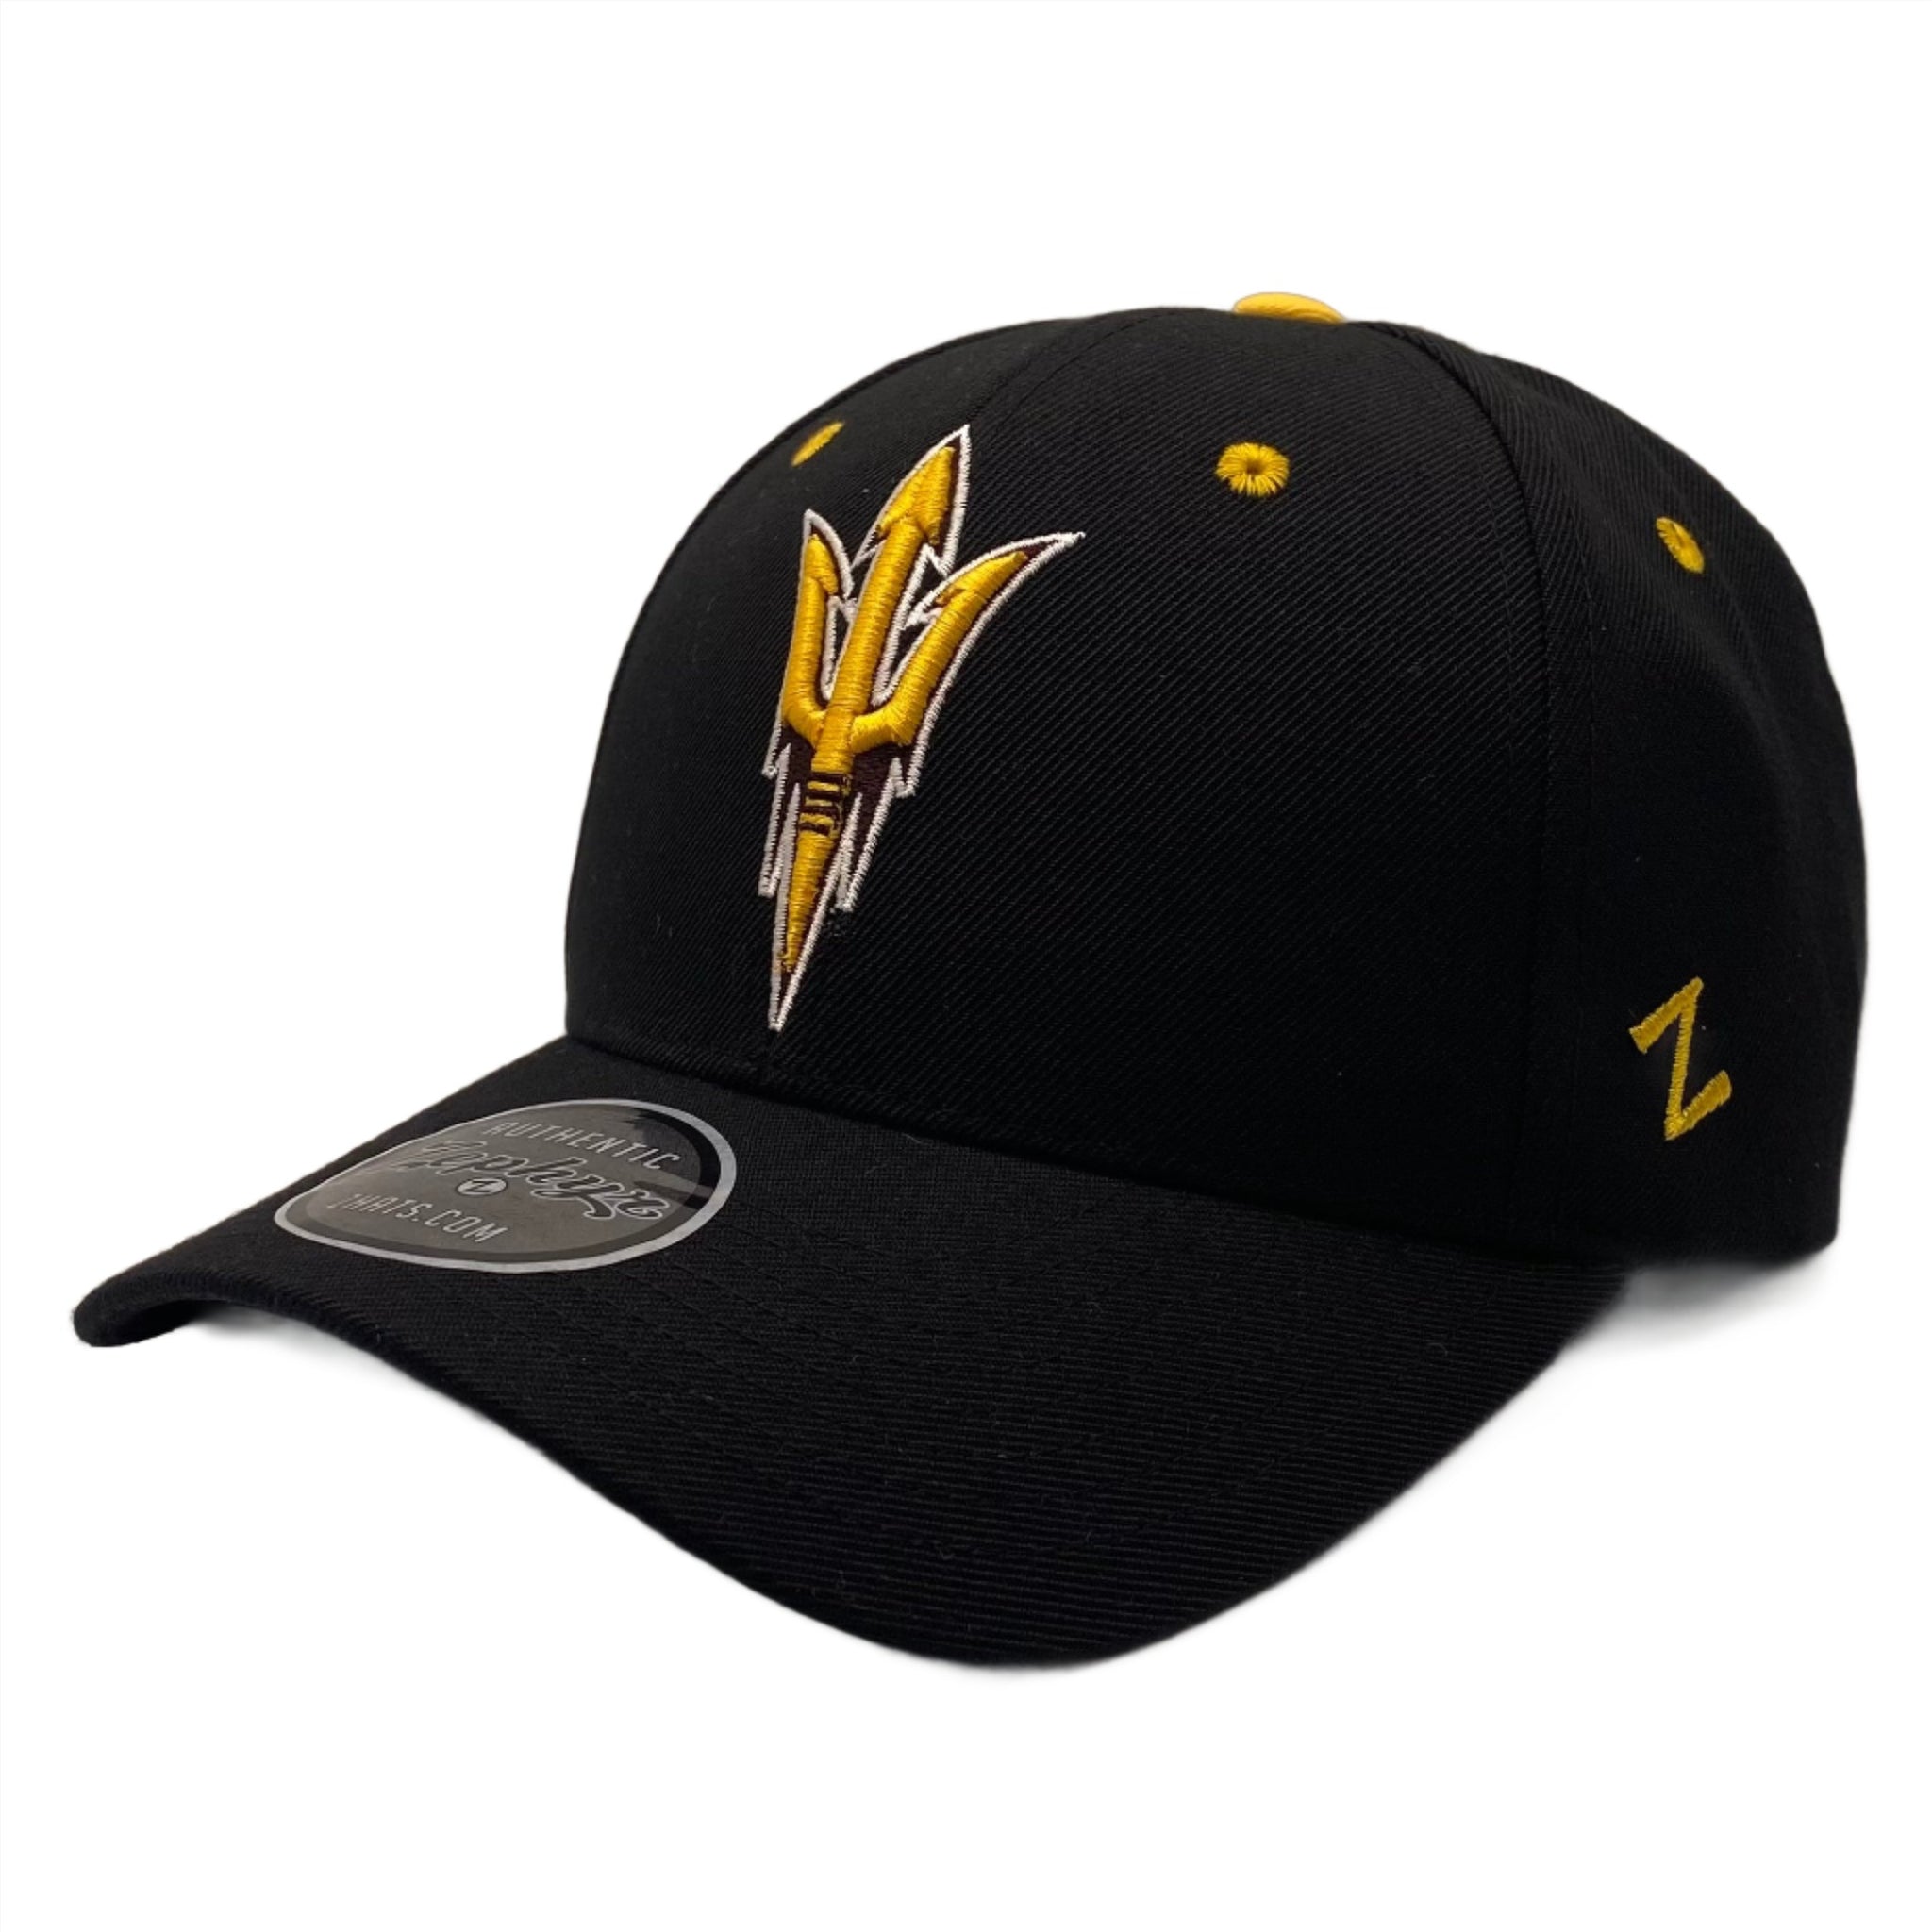 Arizona State University Flaming Fork Competitor Black Adjustable Hat